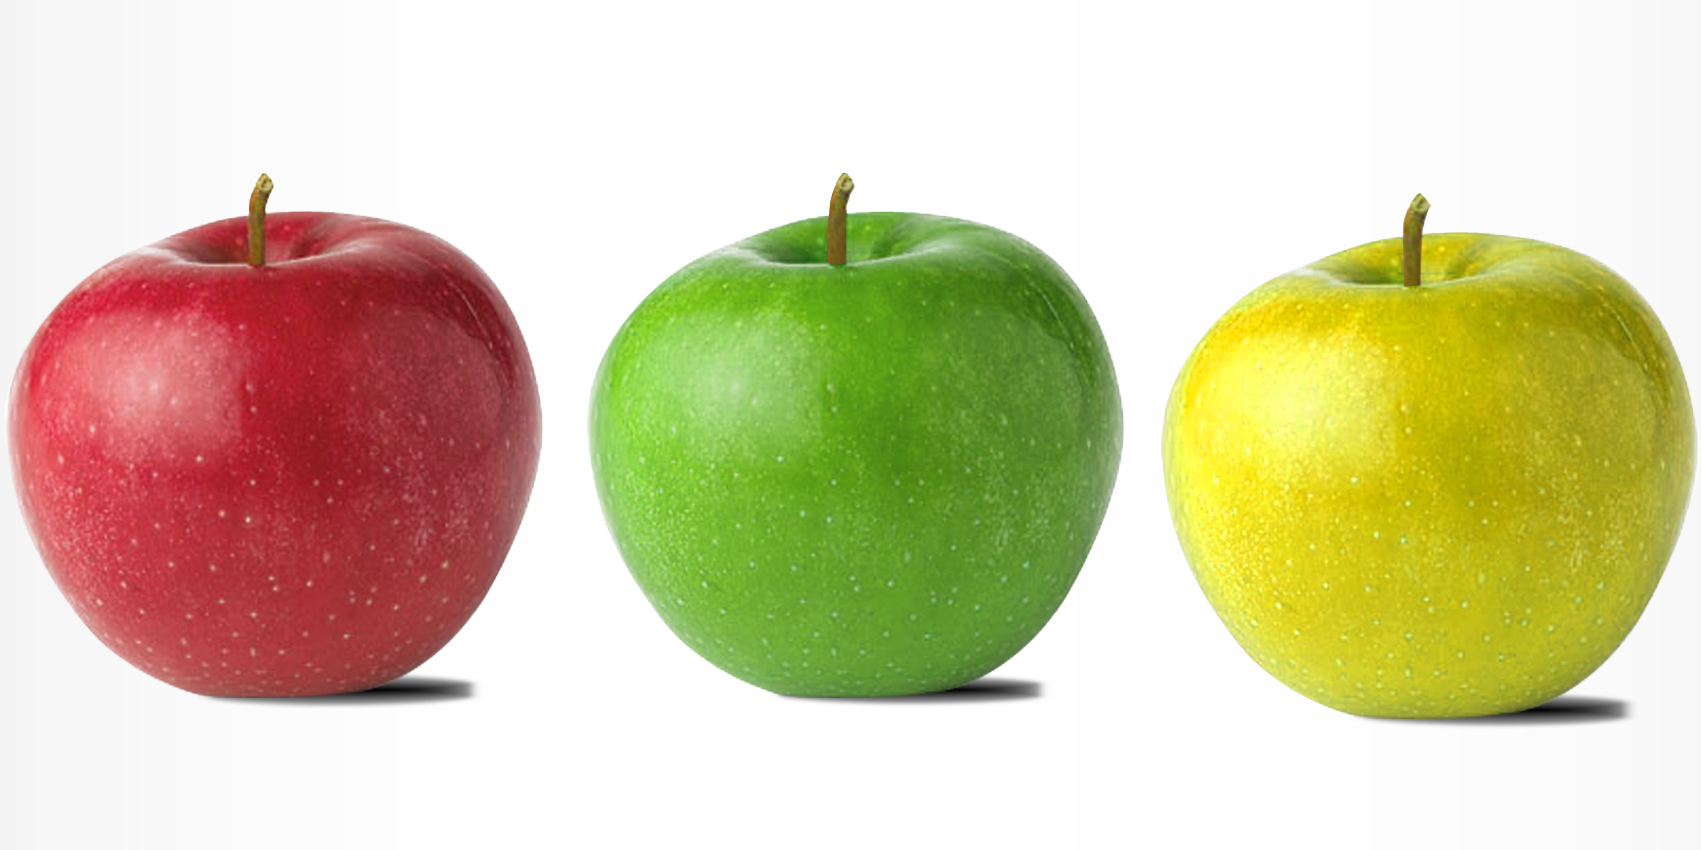 Apple three. Разные яблоки. Цветные яблоки. Три яблока. Яблоки разного цвета.